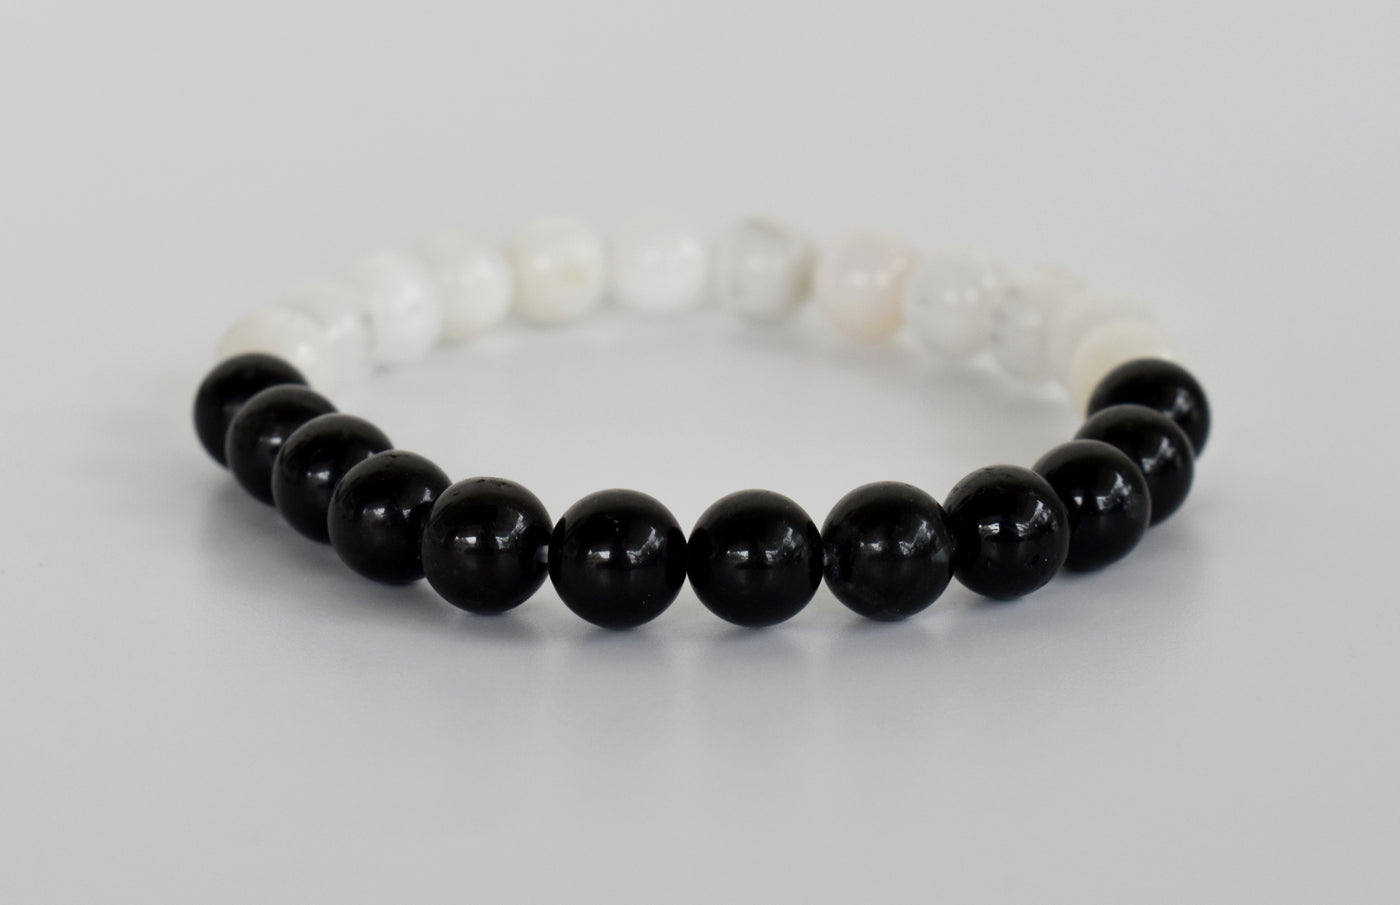 Yin Yang Balance Crystal Bracelet, Selenite, Black Tourmaline Crystal Healing Spiritual Support Balance